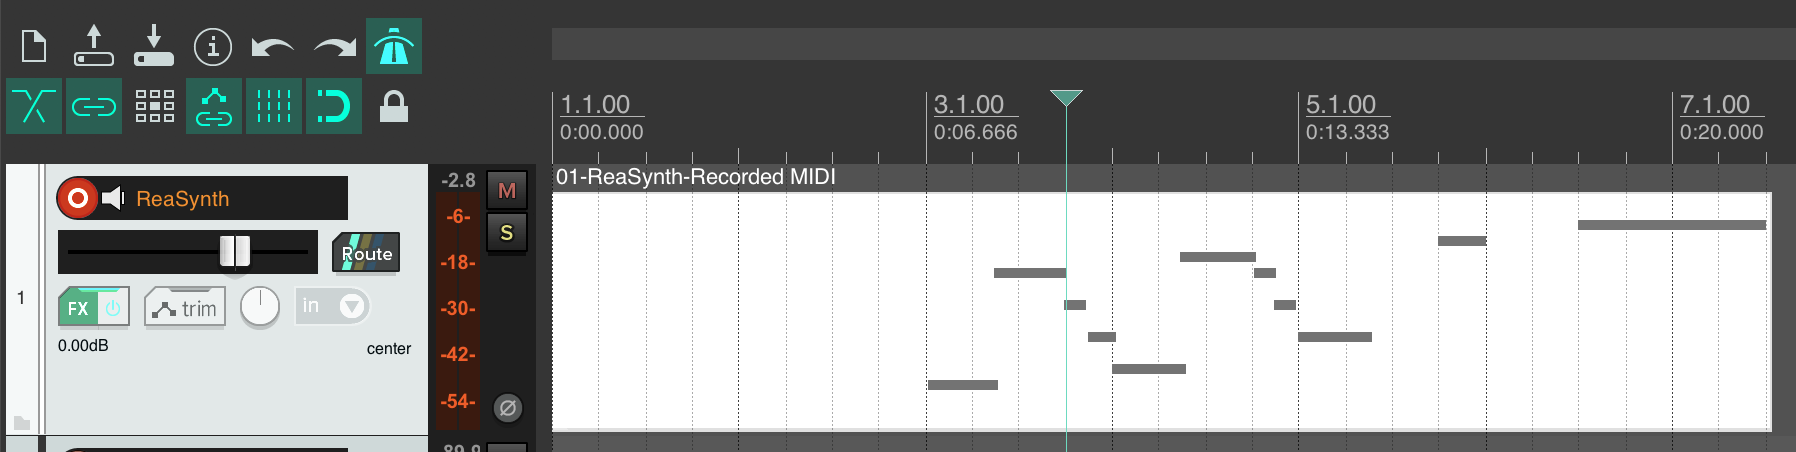 MIDI Media Item with MIDI Data visible.